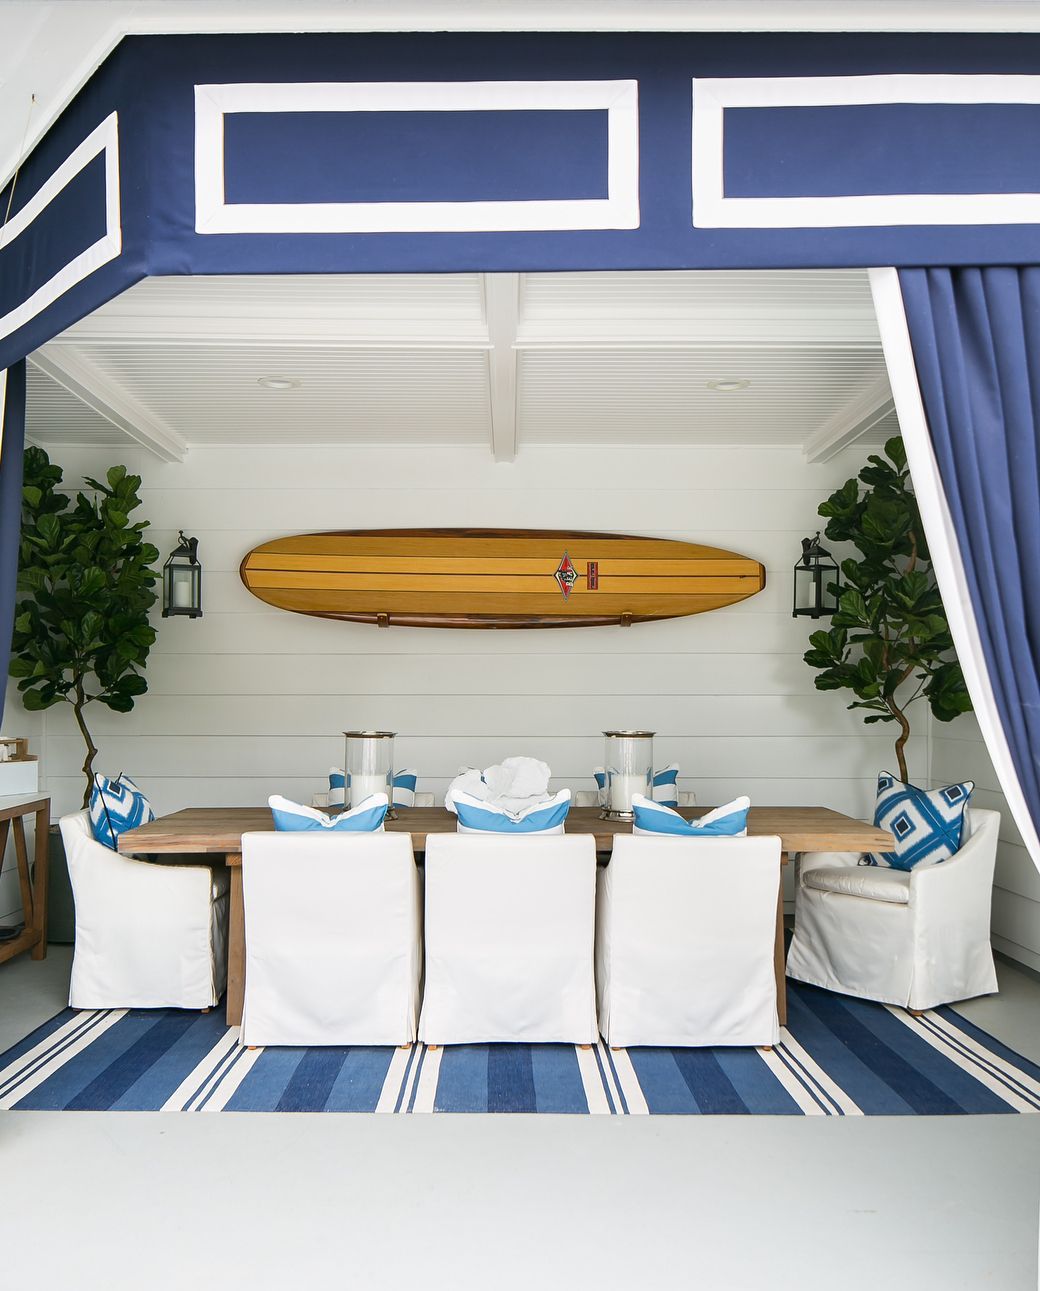 Coastal Dining room with Surfboard on wall via @agk_designstudio